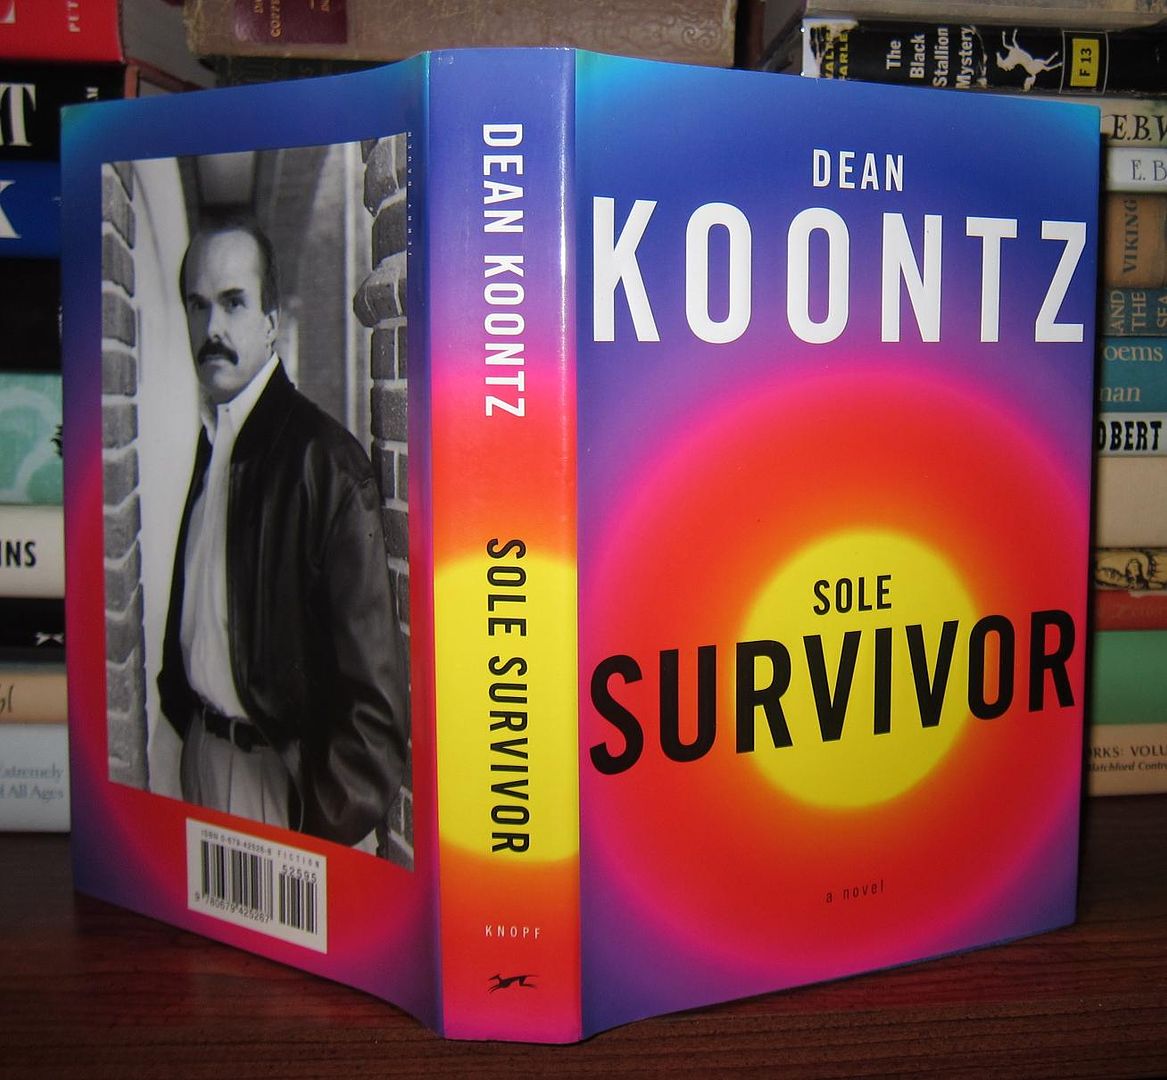 KOONTZ, DEAN - Sole Survivor